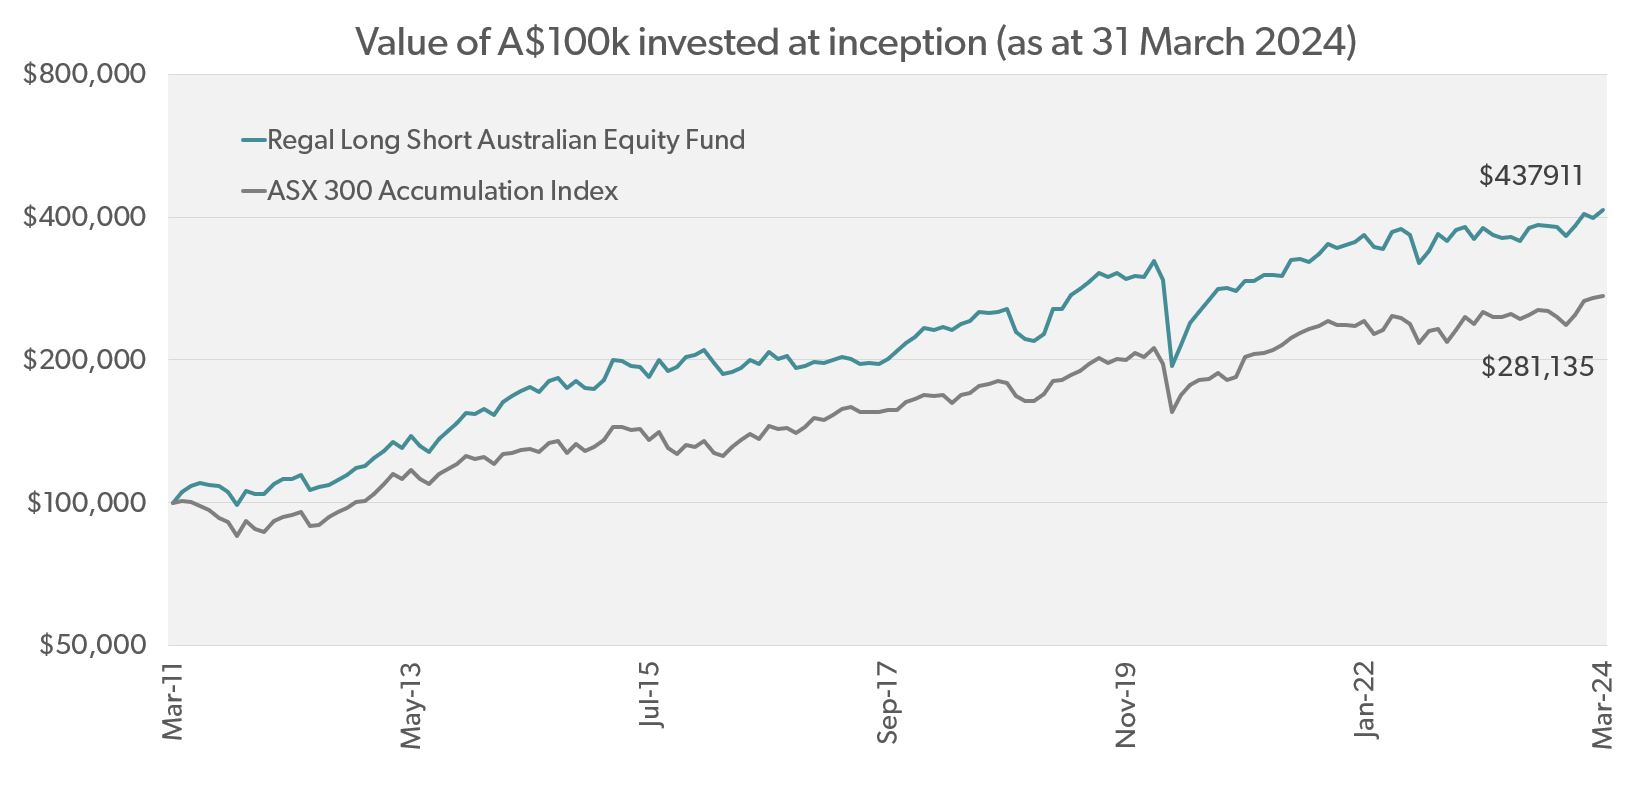 Regal Long Short Australian Equity Fund